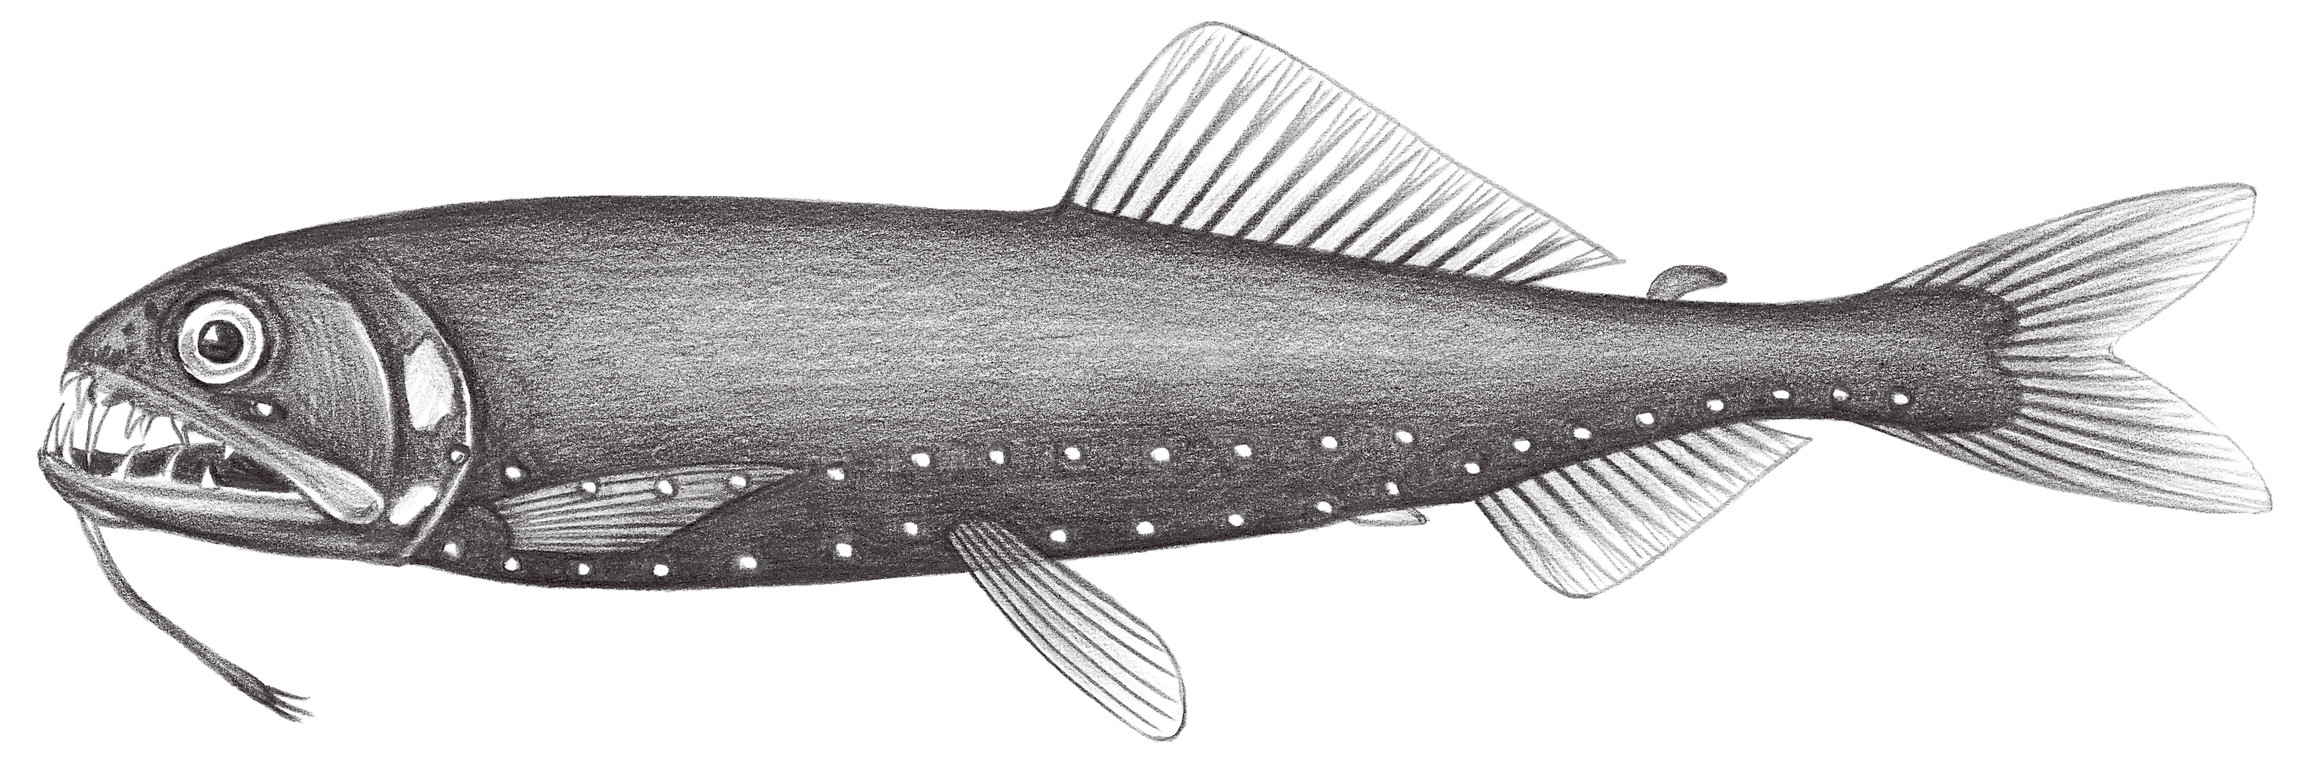 430.	印度食星魚 Astronesthes indica Brauer, 1902